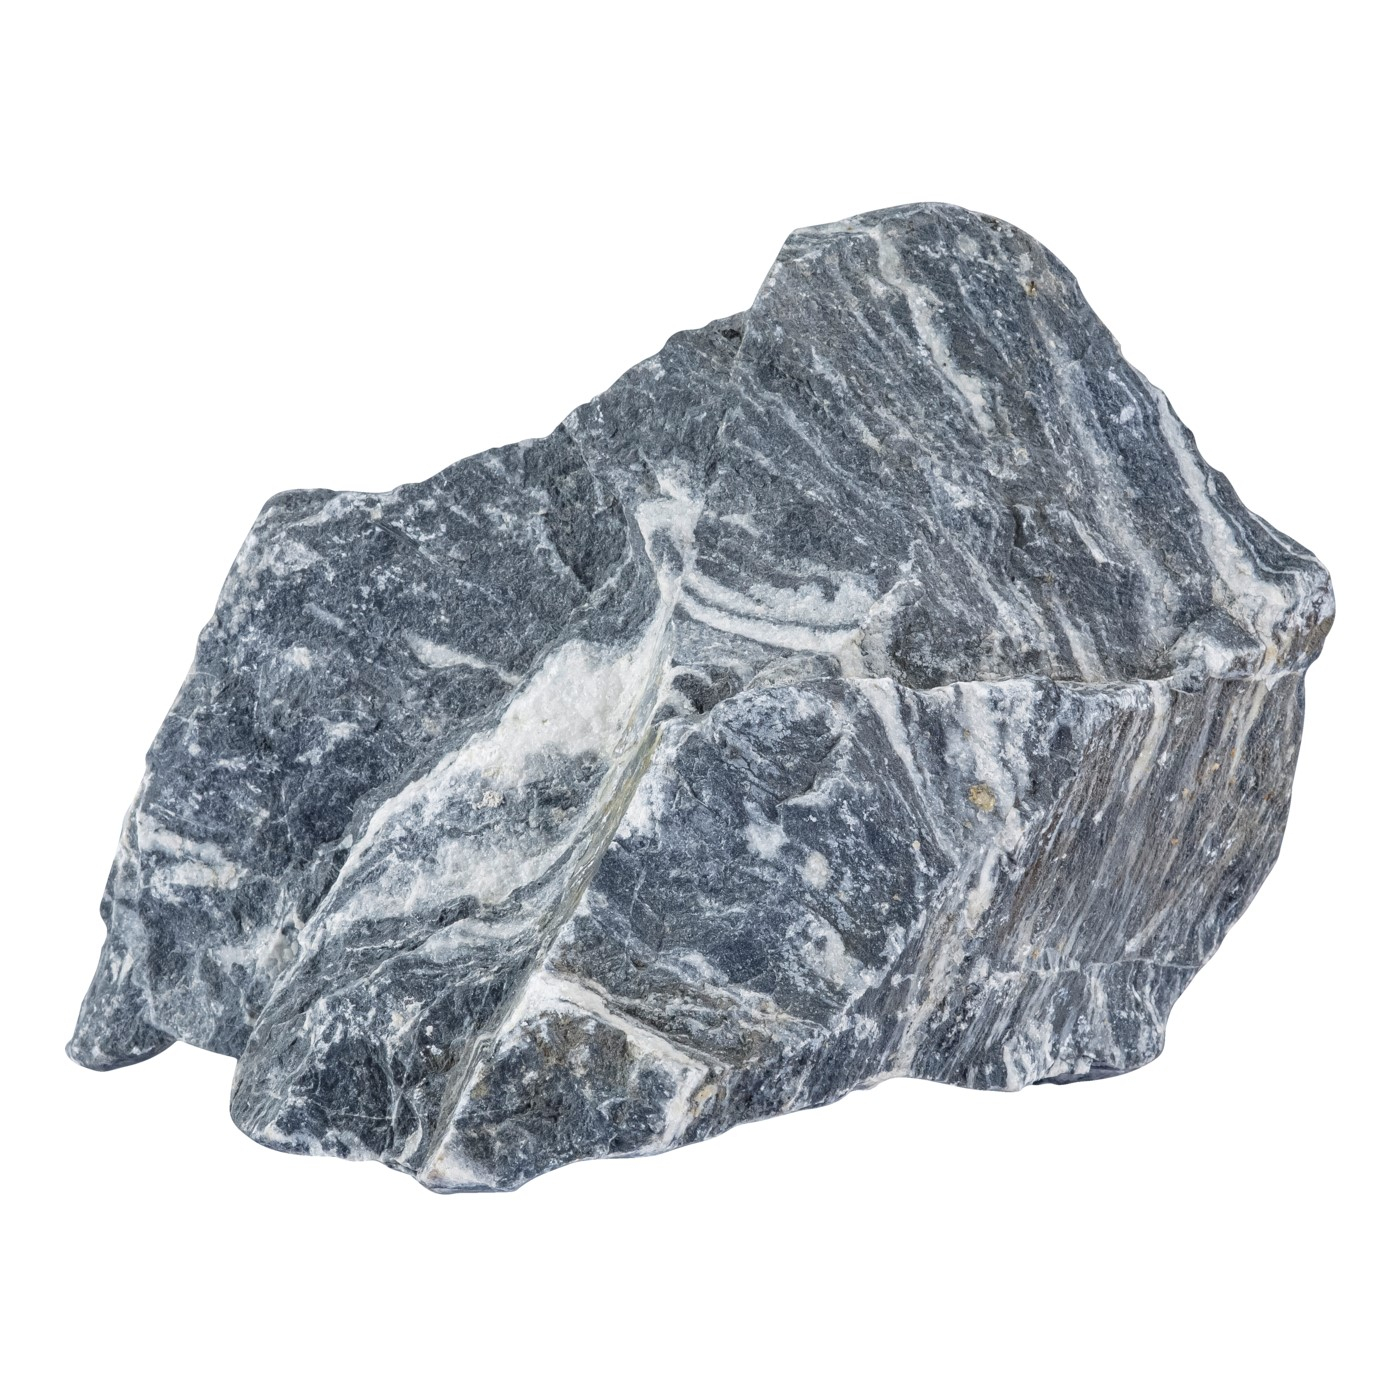 Sera Rock Zebra Stone Roca natural gris y blanca para aquascaping